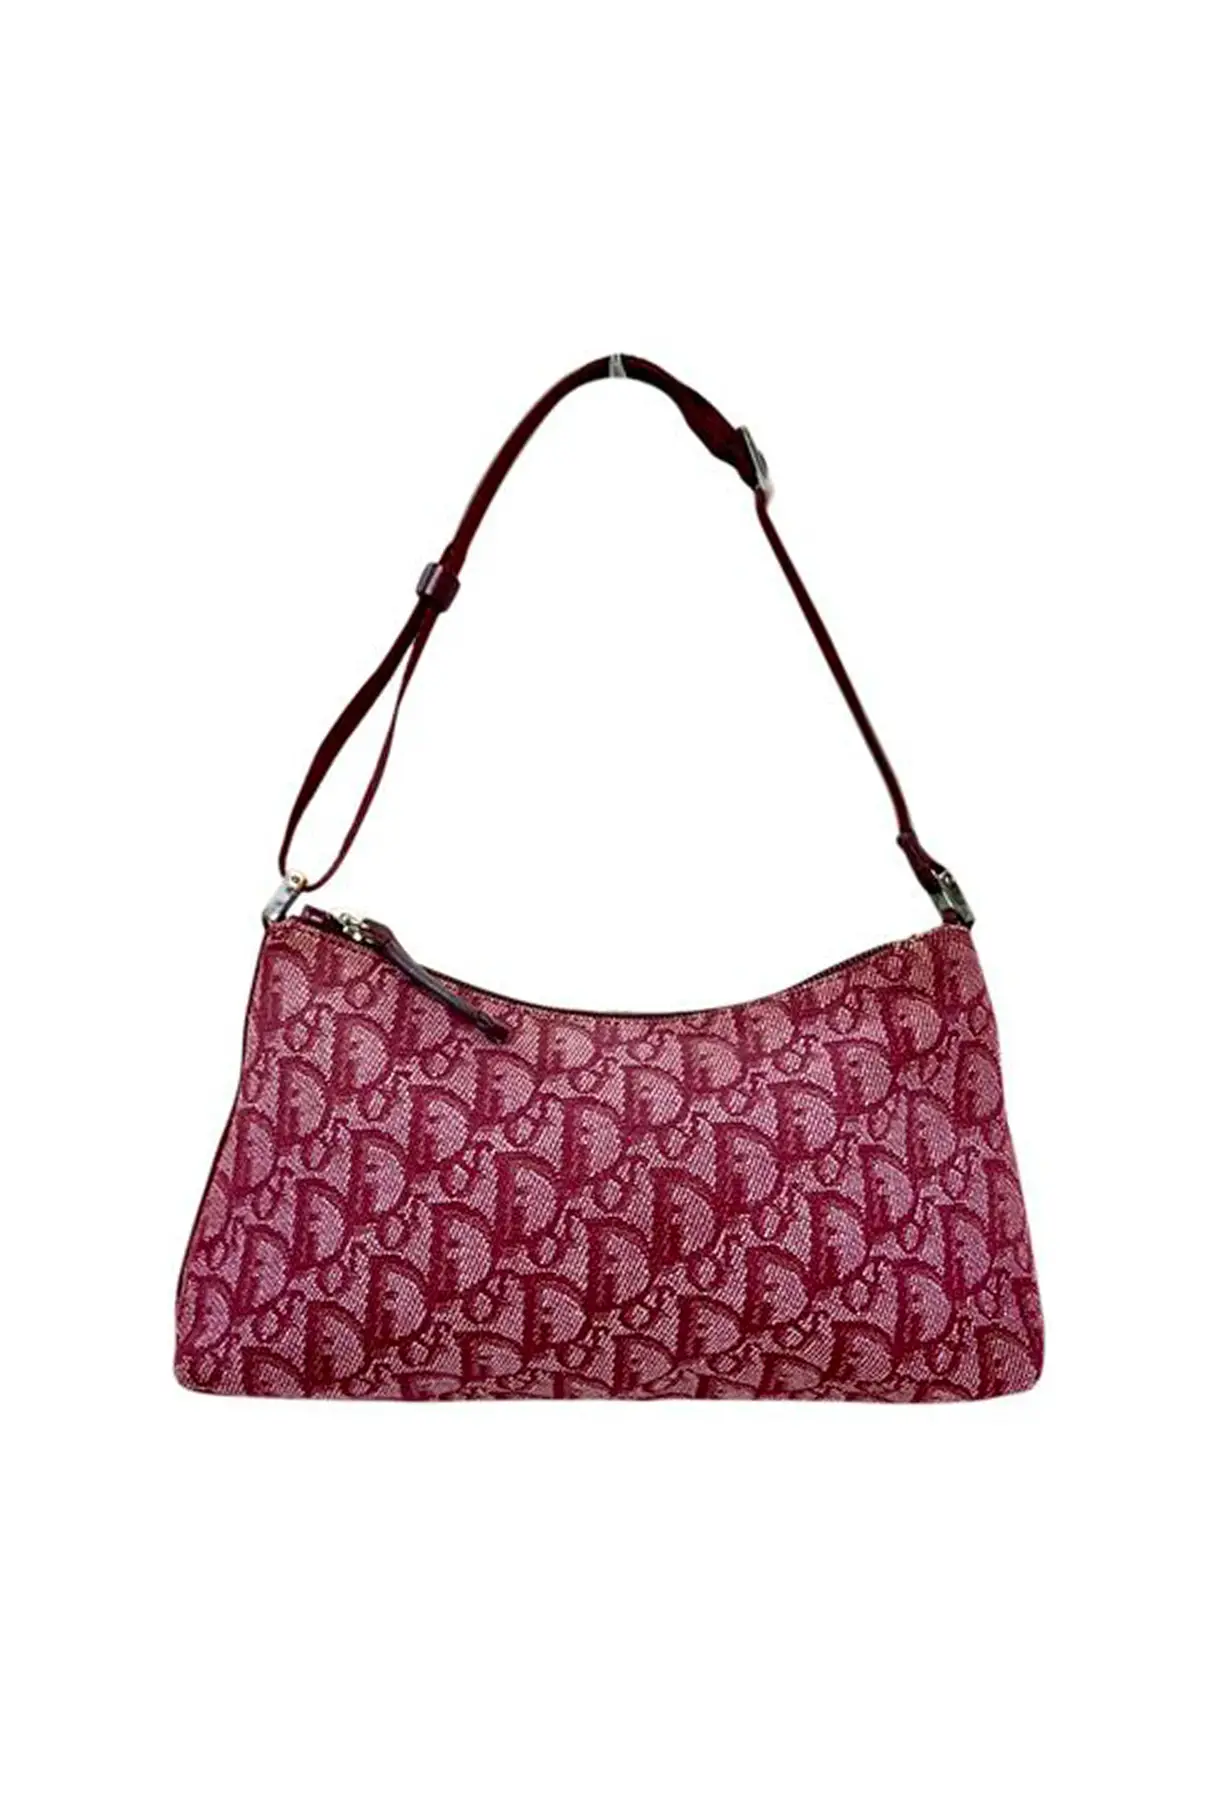 burgundy-canvas-dior-handbag-monogram.jpg